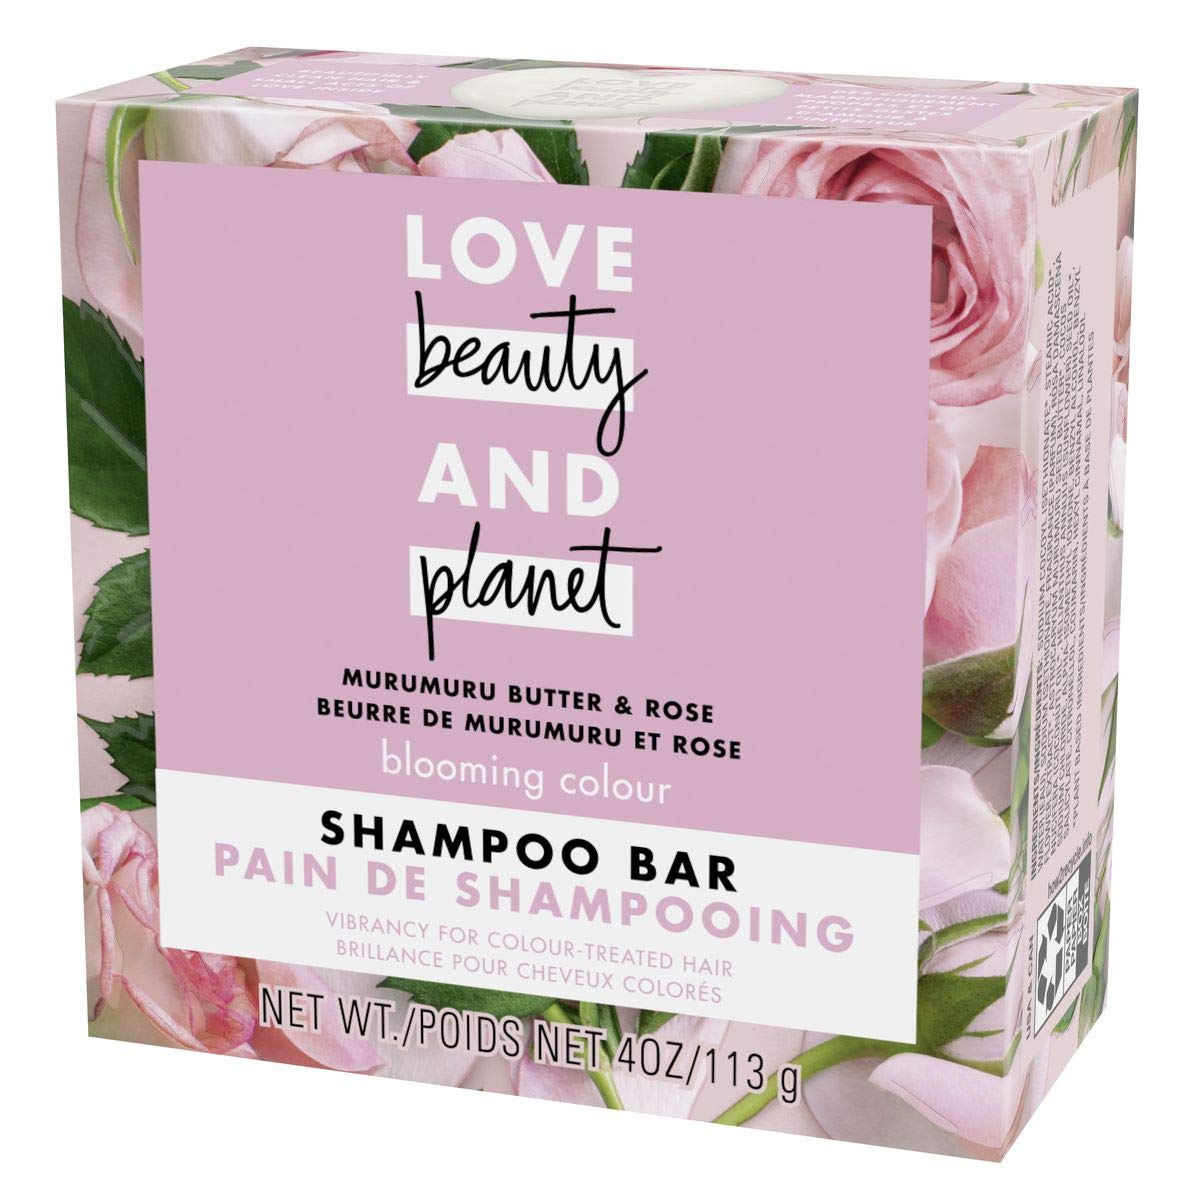 love beauty and planet rosemary szampon wizaz